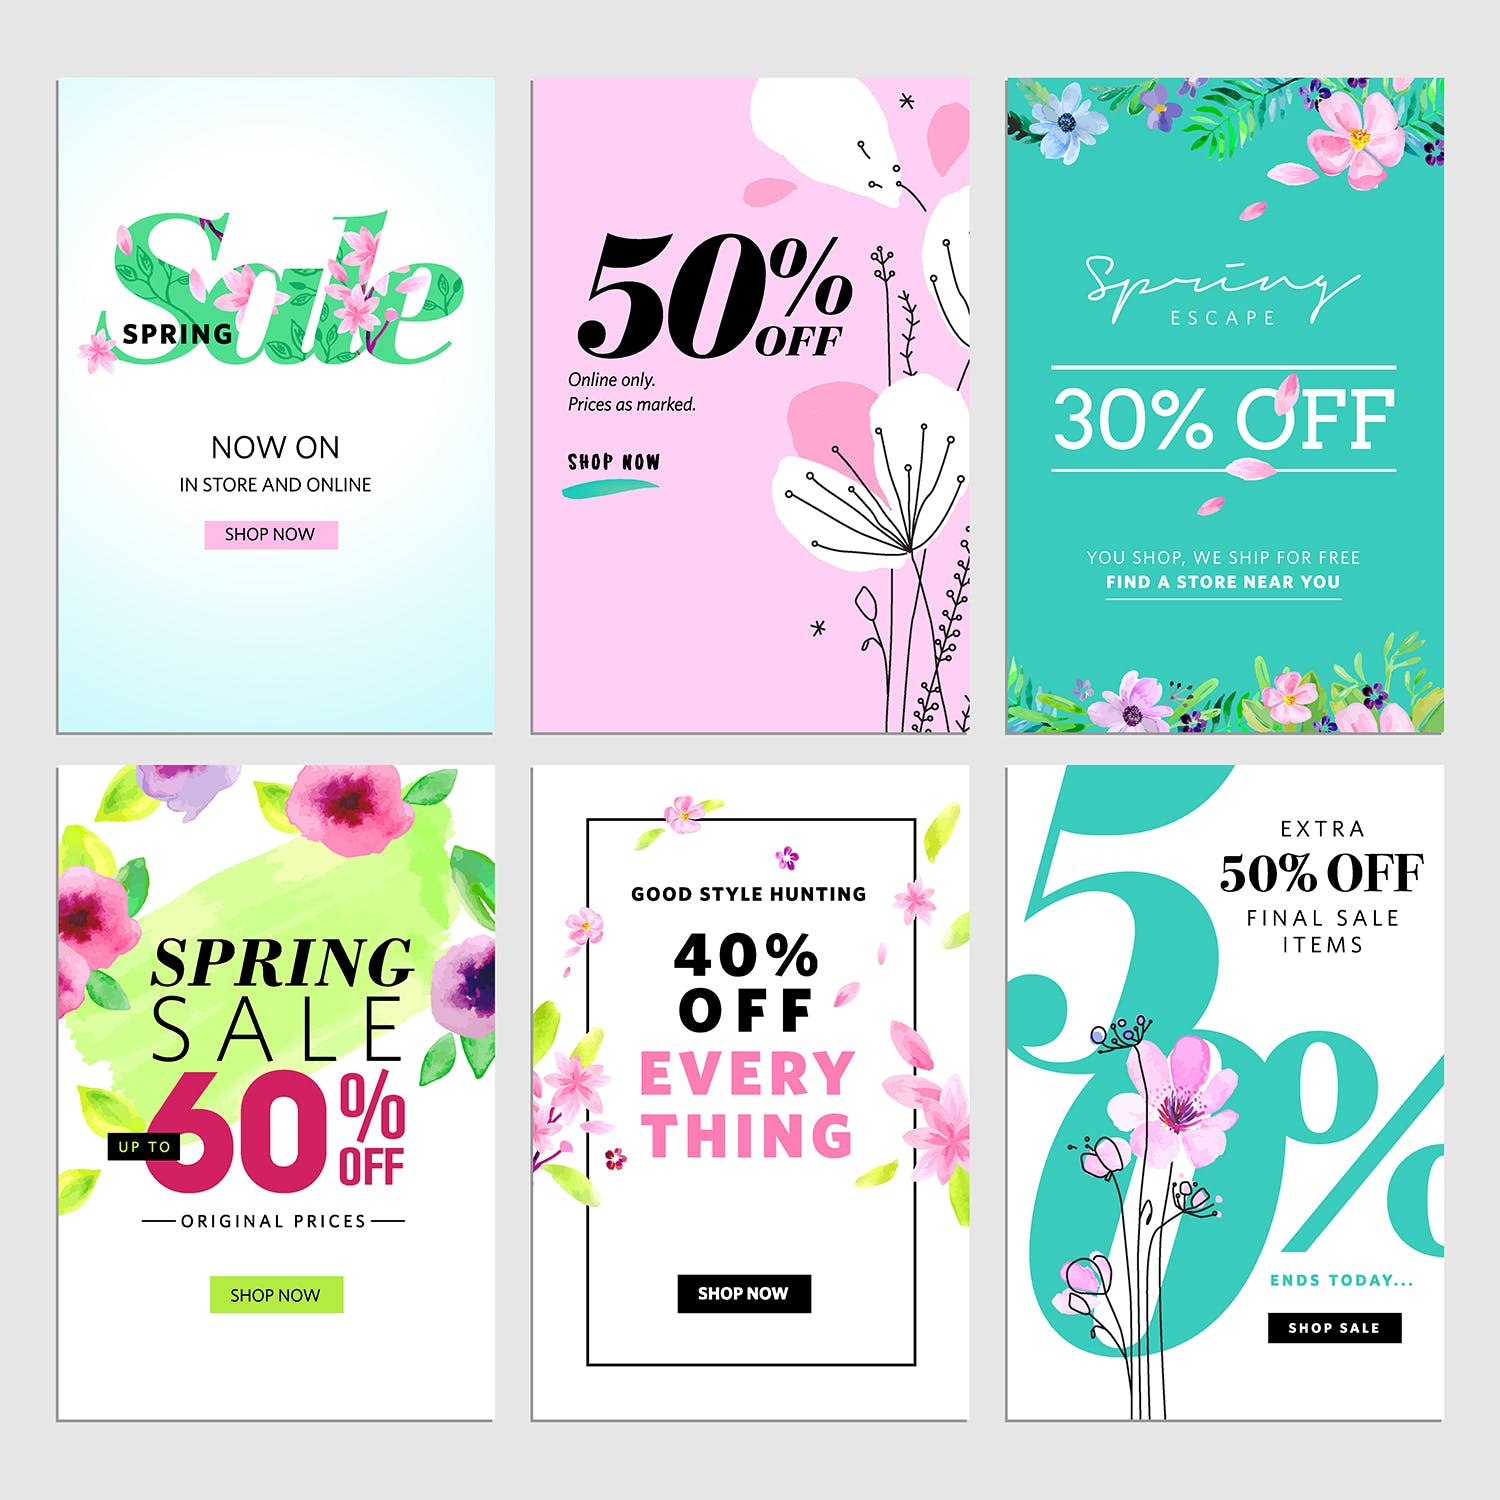 春季促销主题网站广告Banner图素材v7 Spring sale banners插图(1)